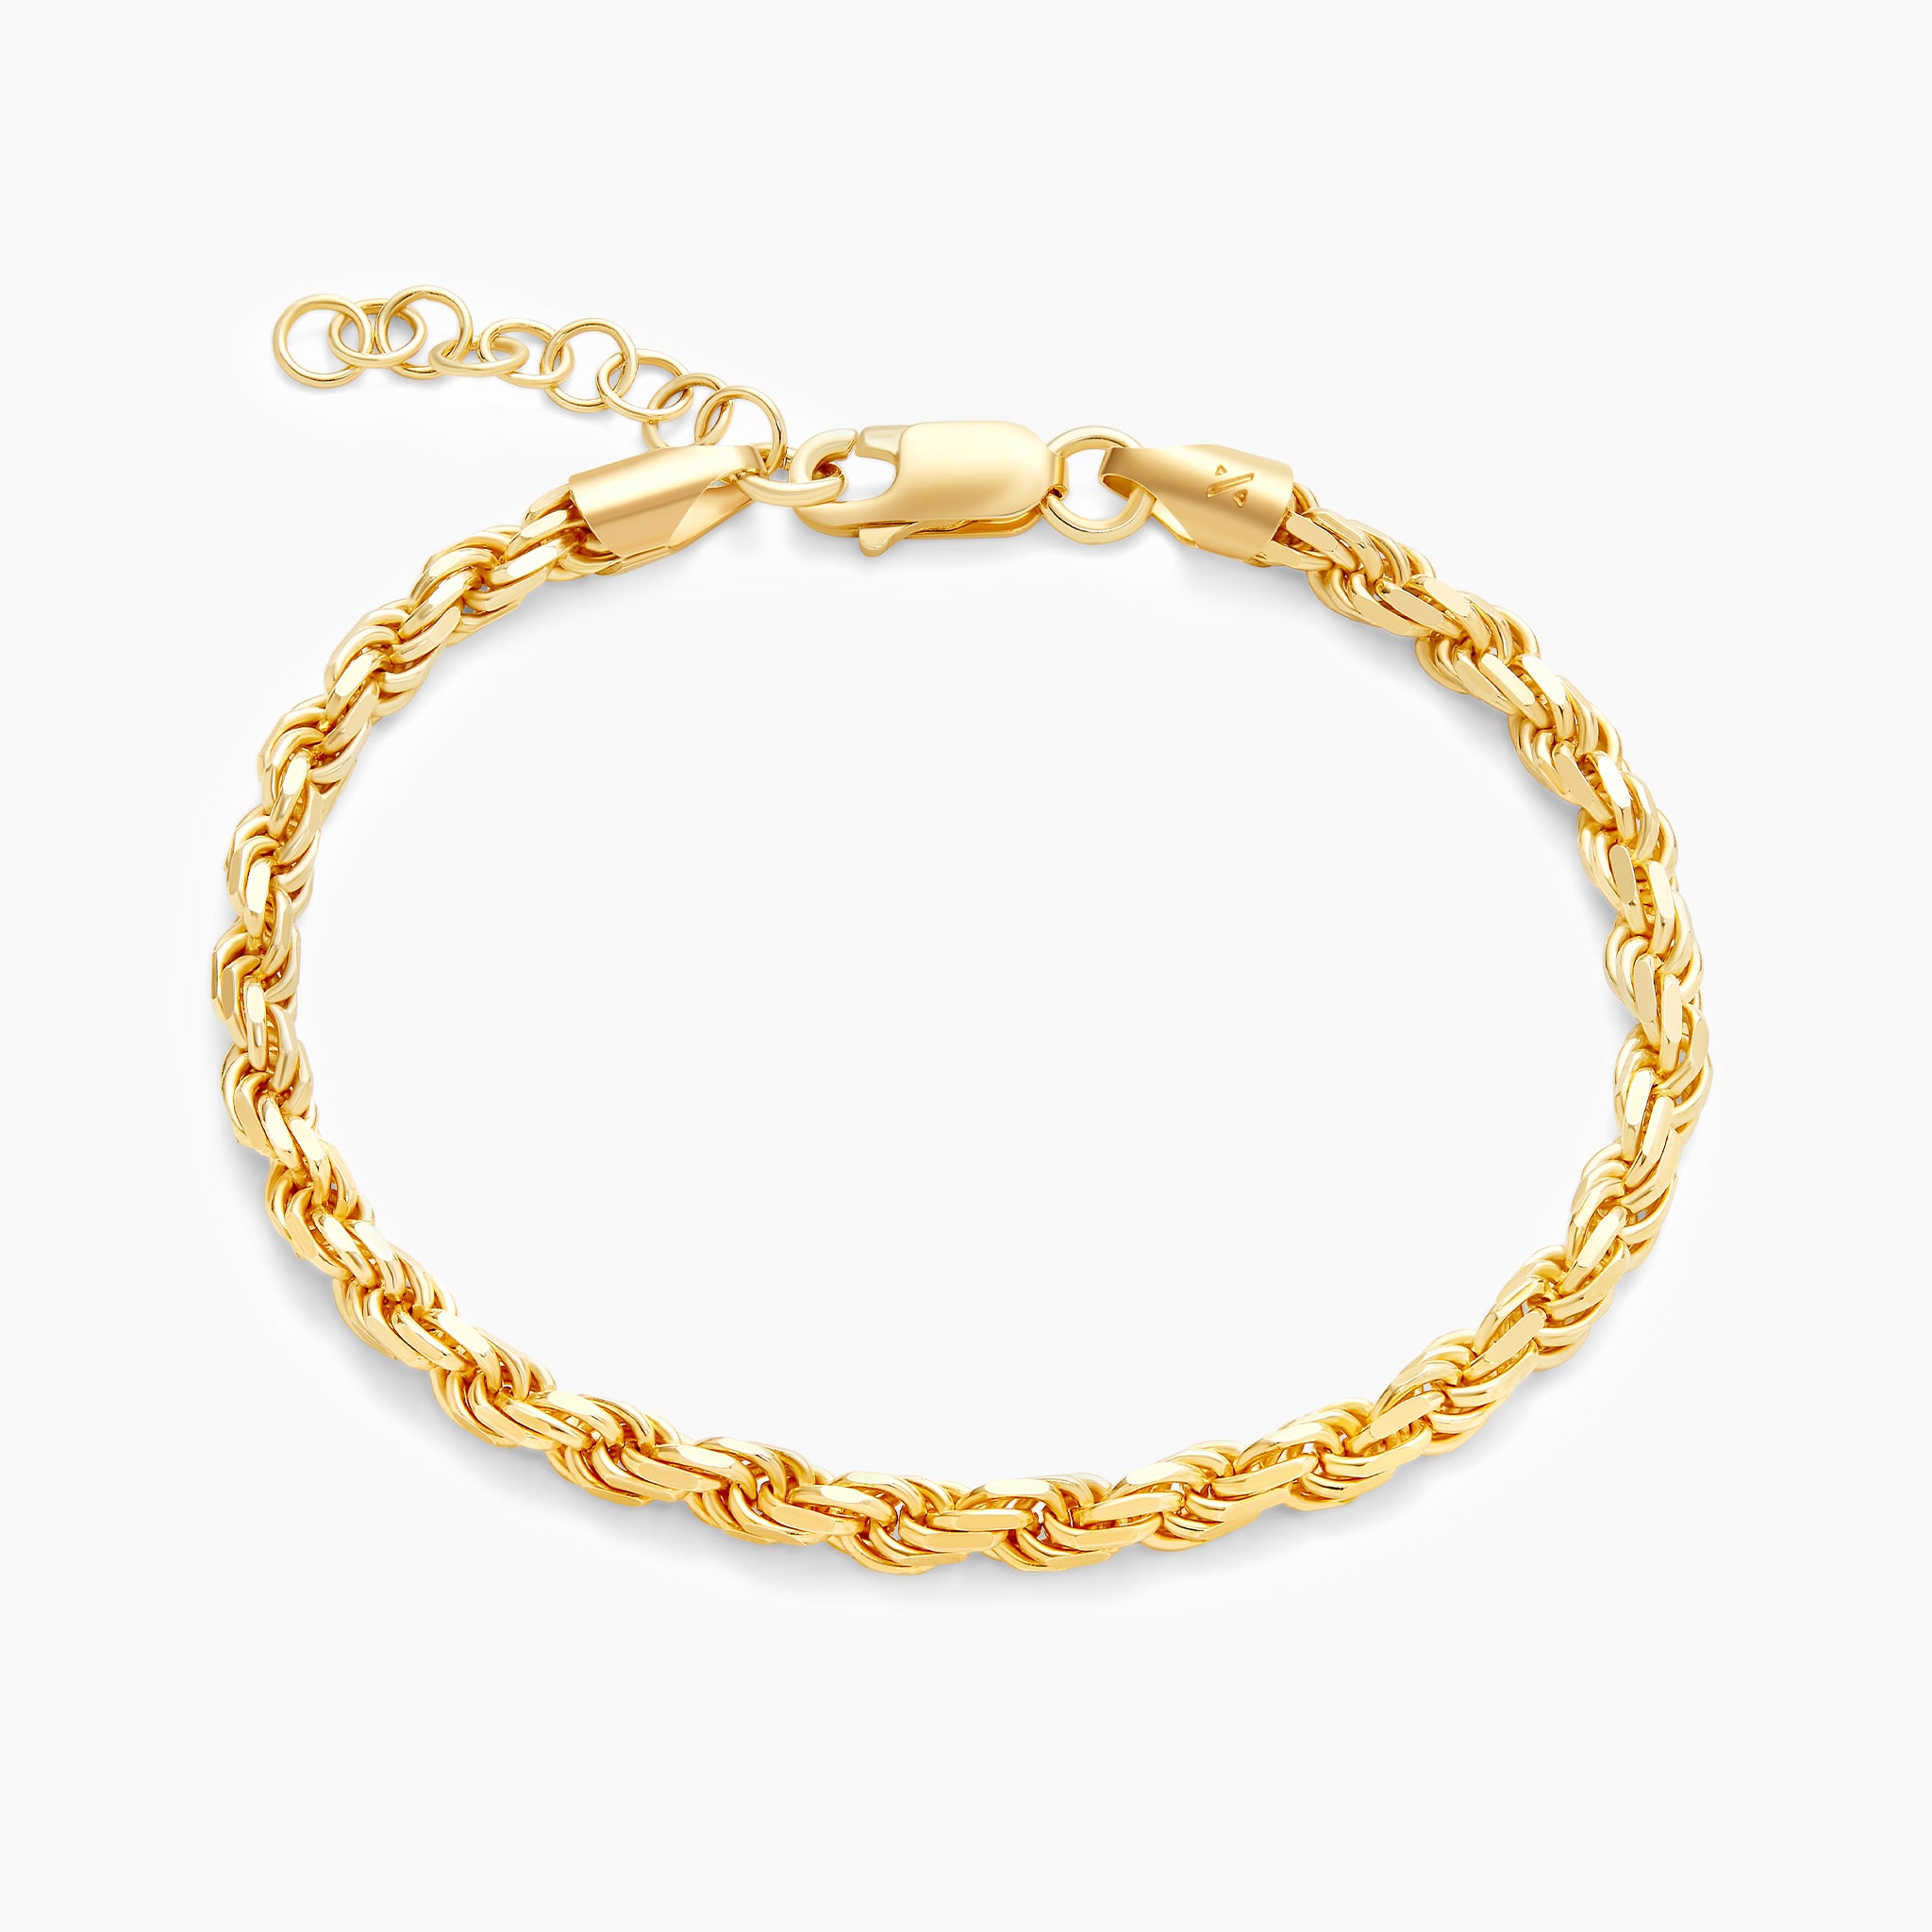 Rope Chain - 4mm - Women's Gold Rope Necklace - JAXXON